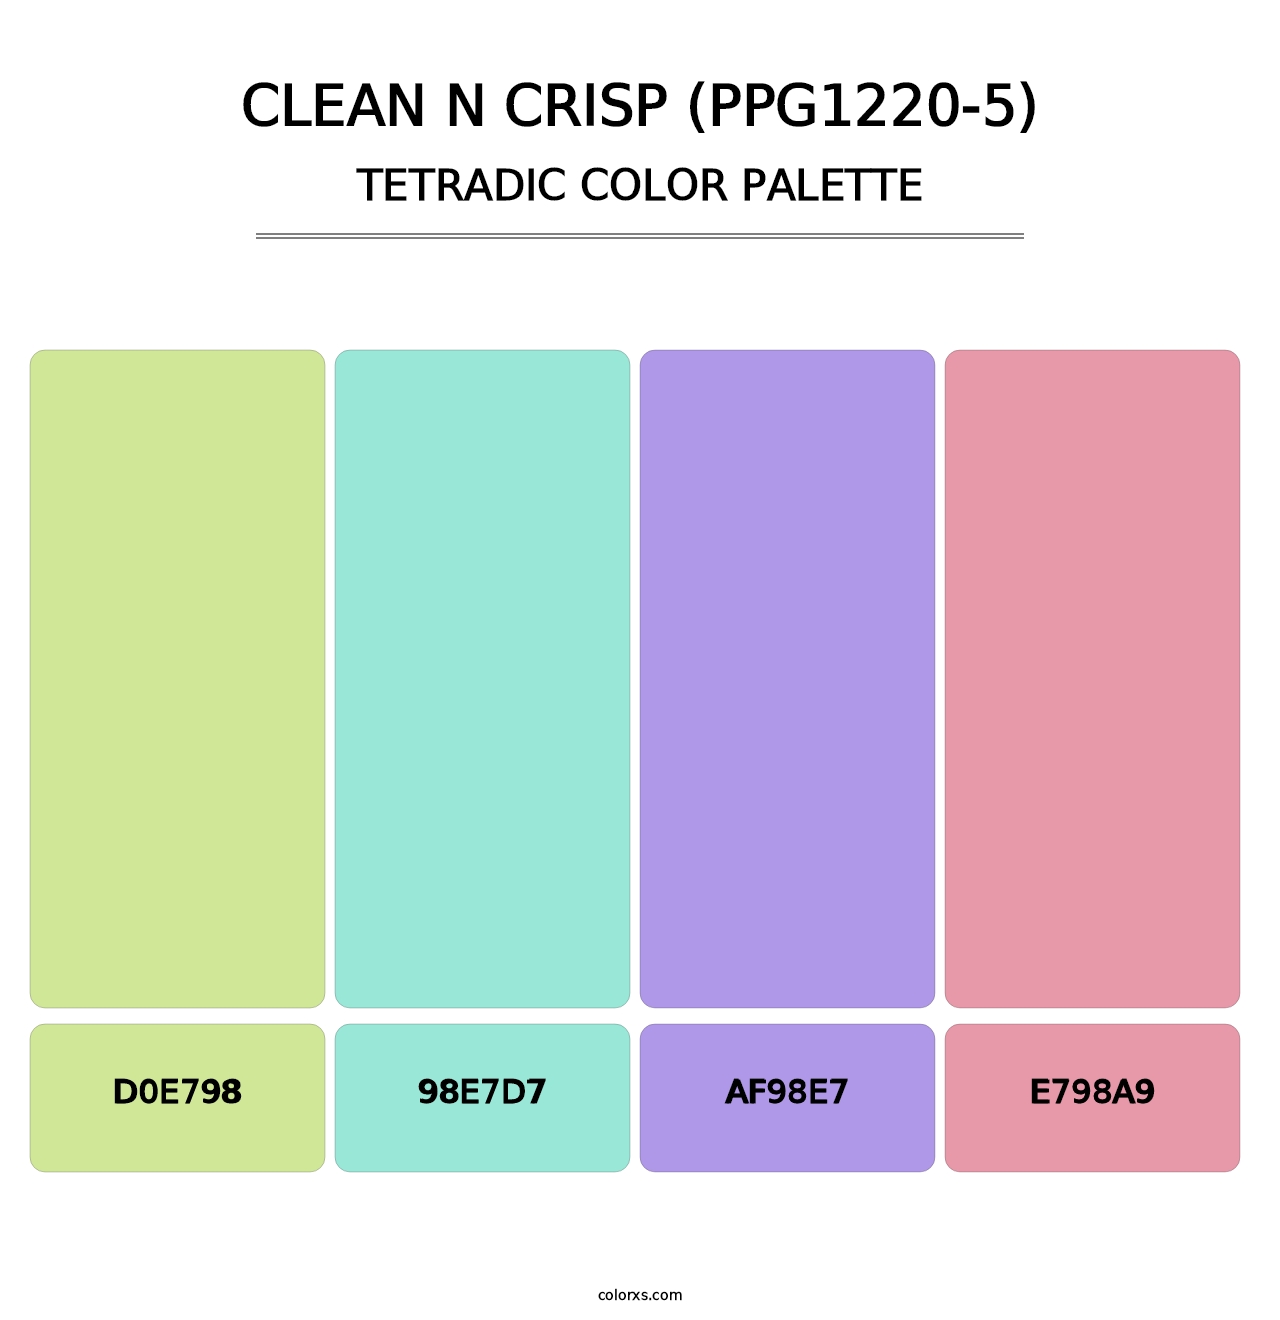 Clean N Crisp (PPG1220-5) - Tetradic Color Palette